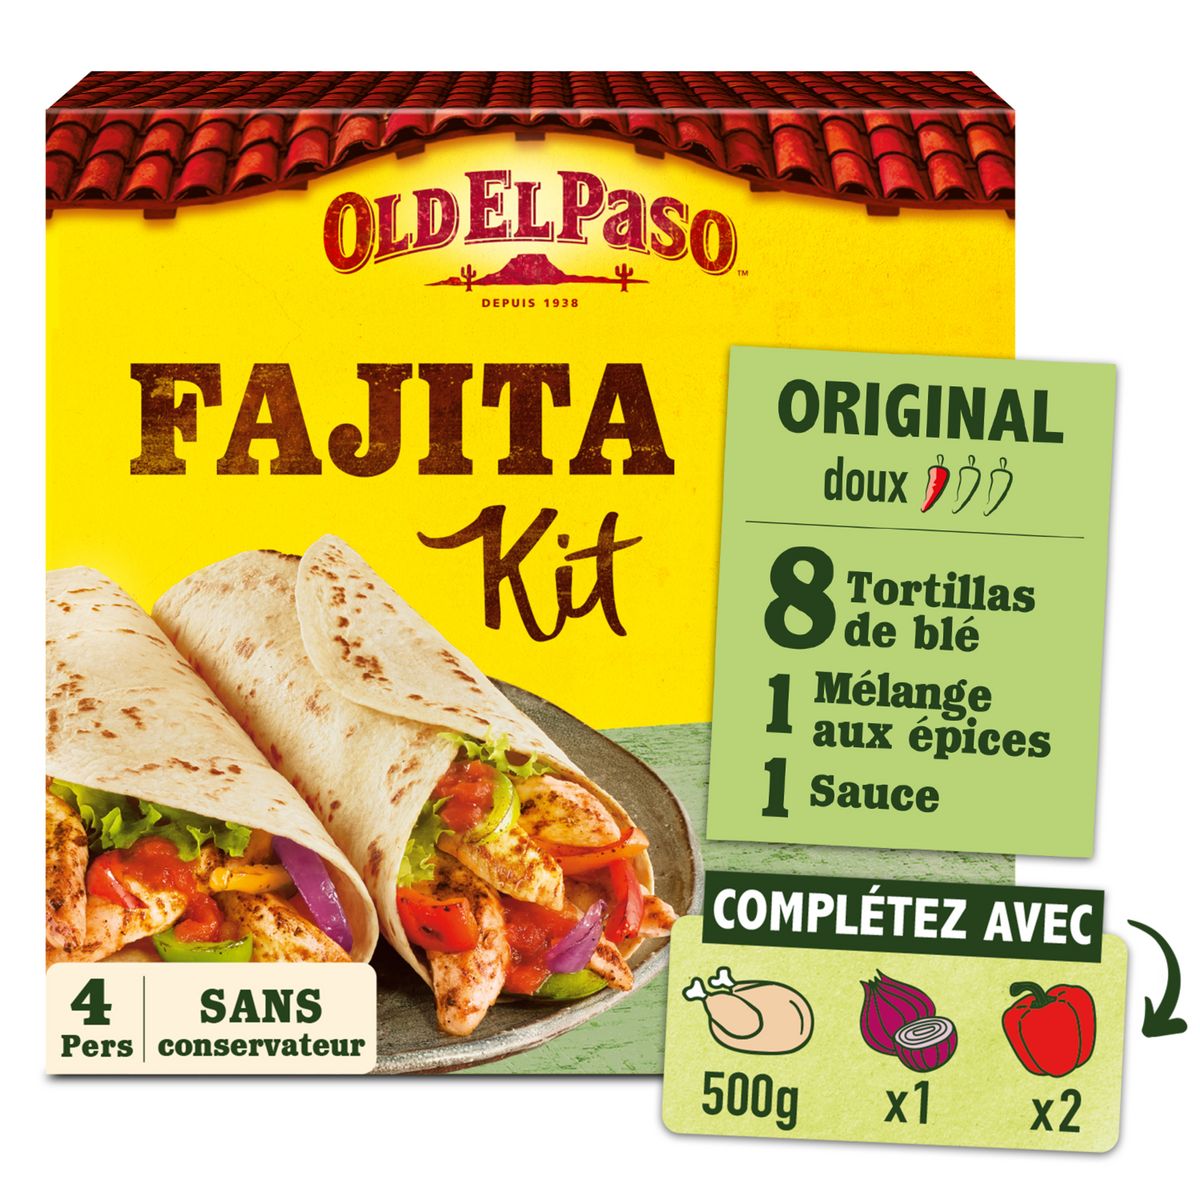 OLD EL PASO Kit pour fajitas doux original 8 tortillas 500g